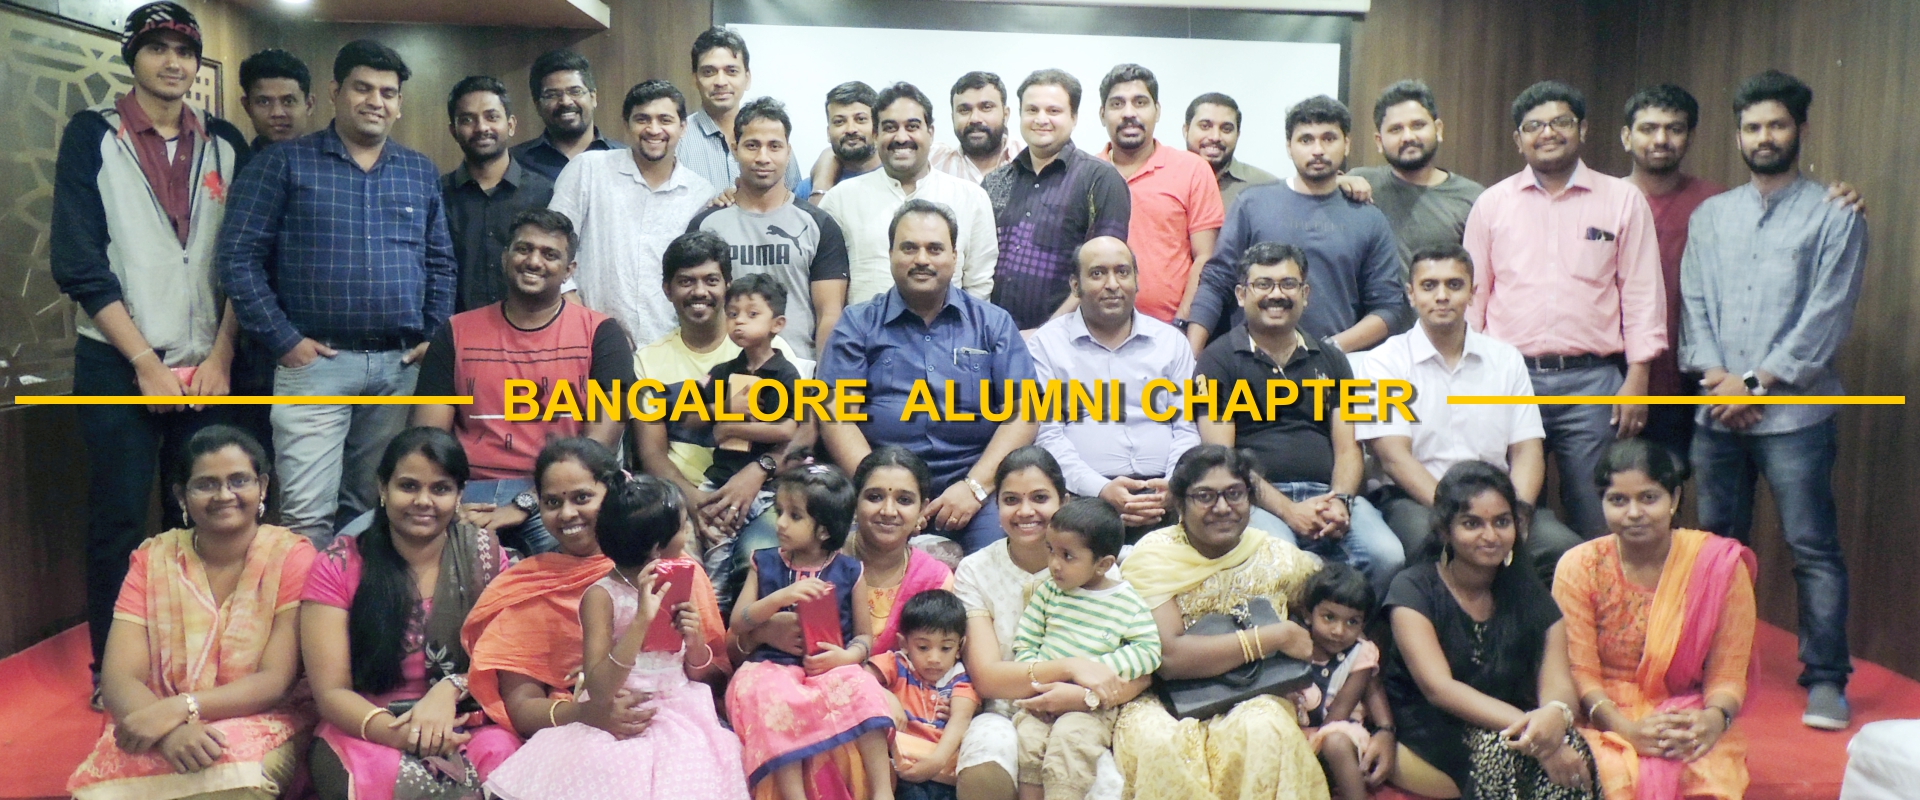 <h2>Inauguration of Bangalore Alumni Chapter</h2>